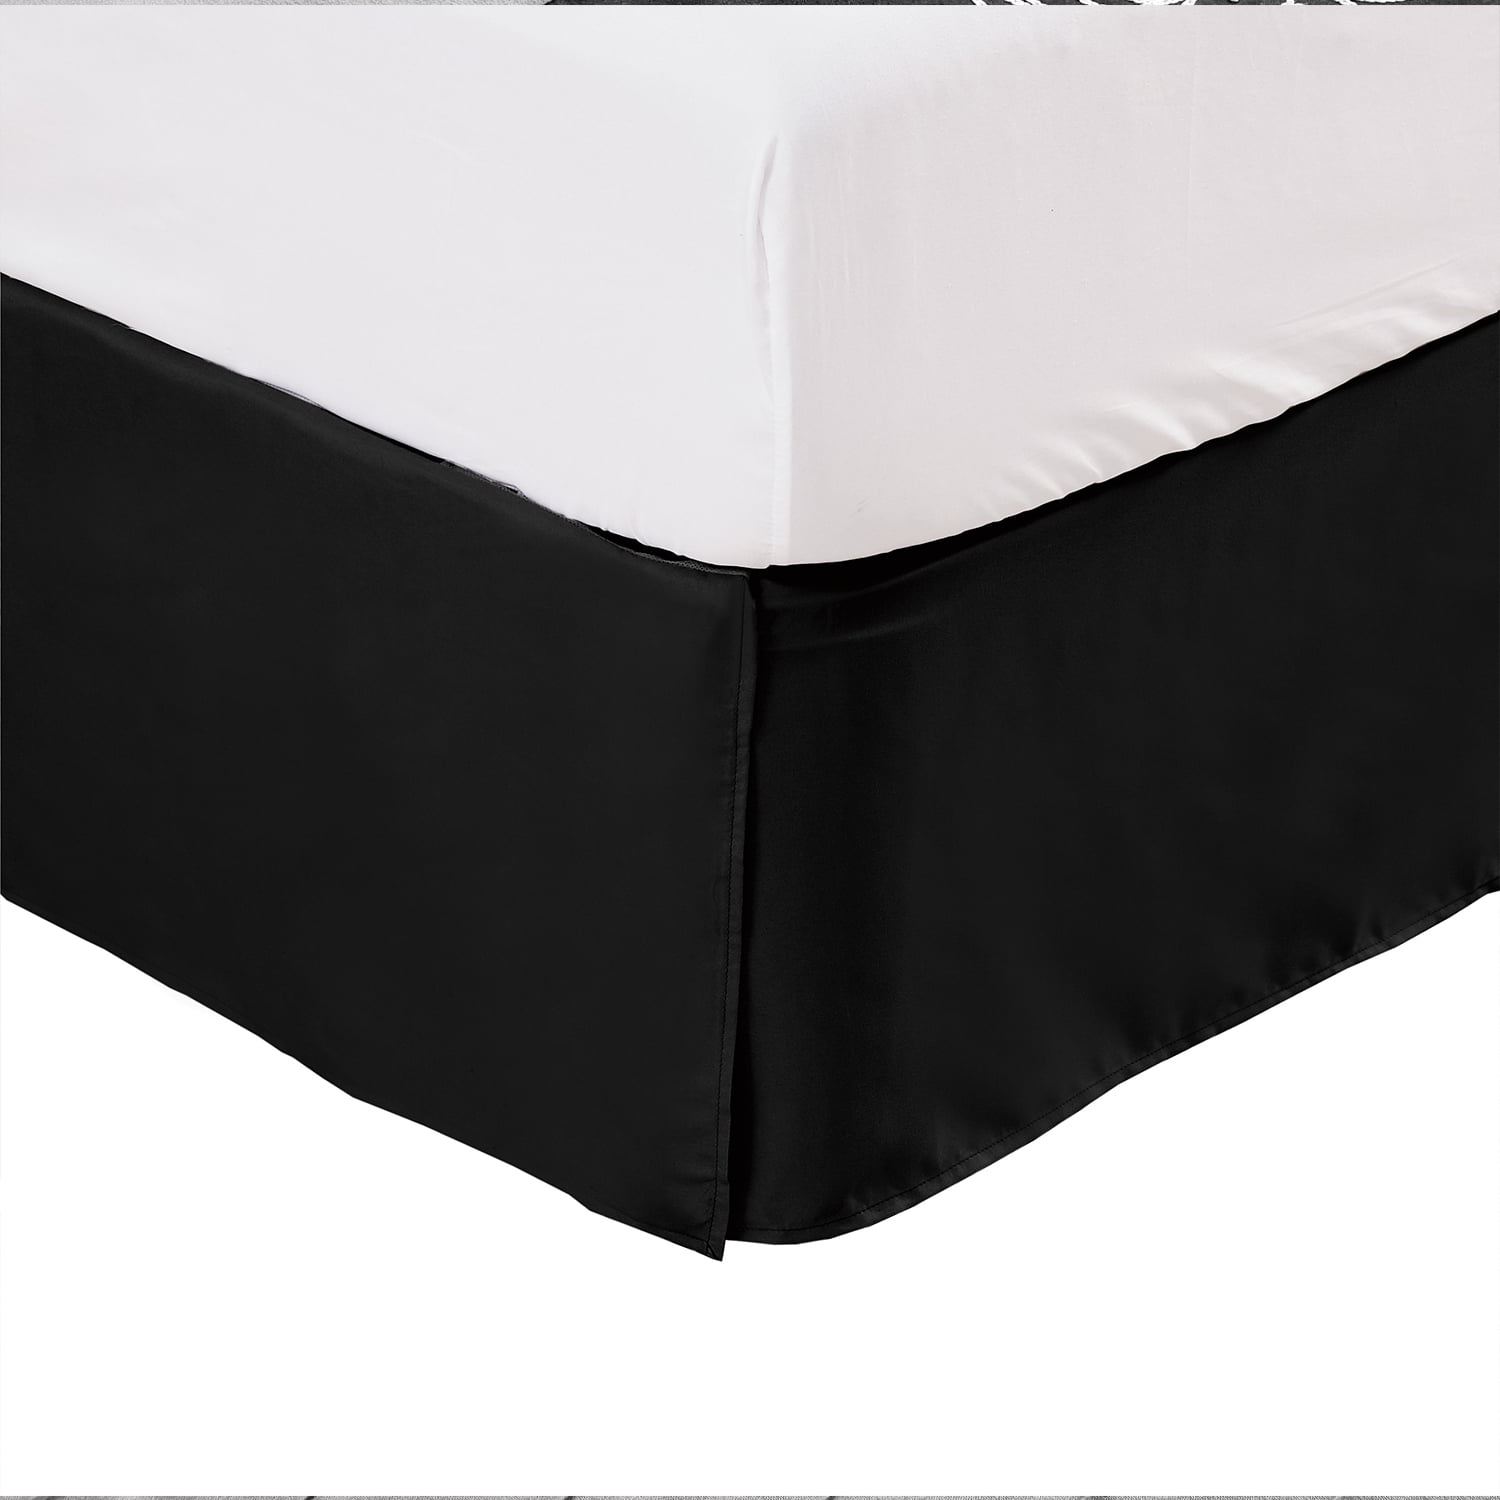 BEDSURE TWIN SHEETS GRAY 4PCS- PILLOWCASE, SHEET, FITTED SHEET BLACK BED  SKIRT